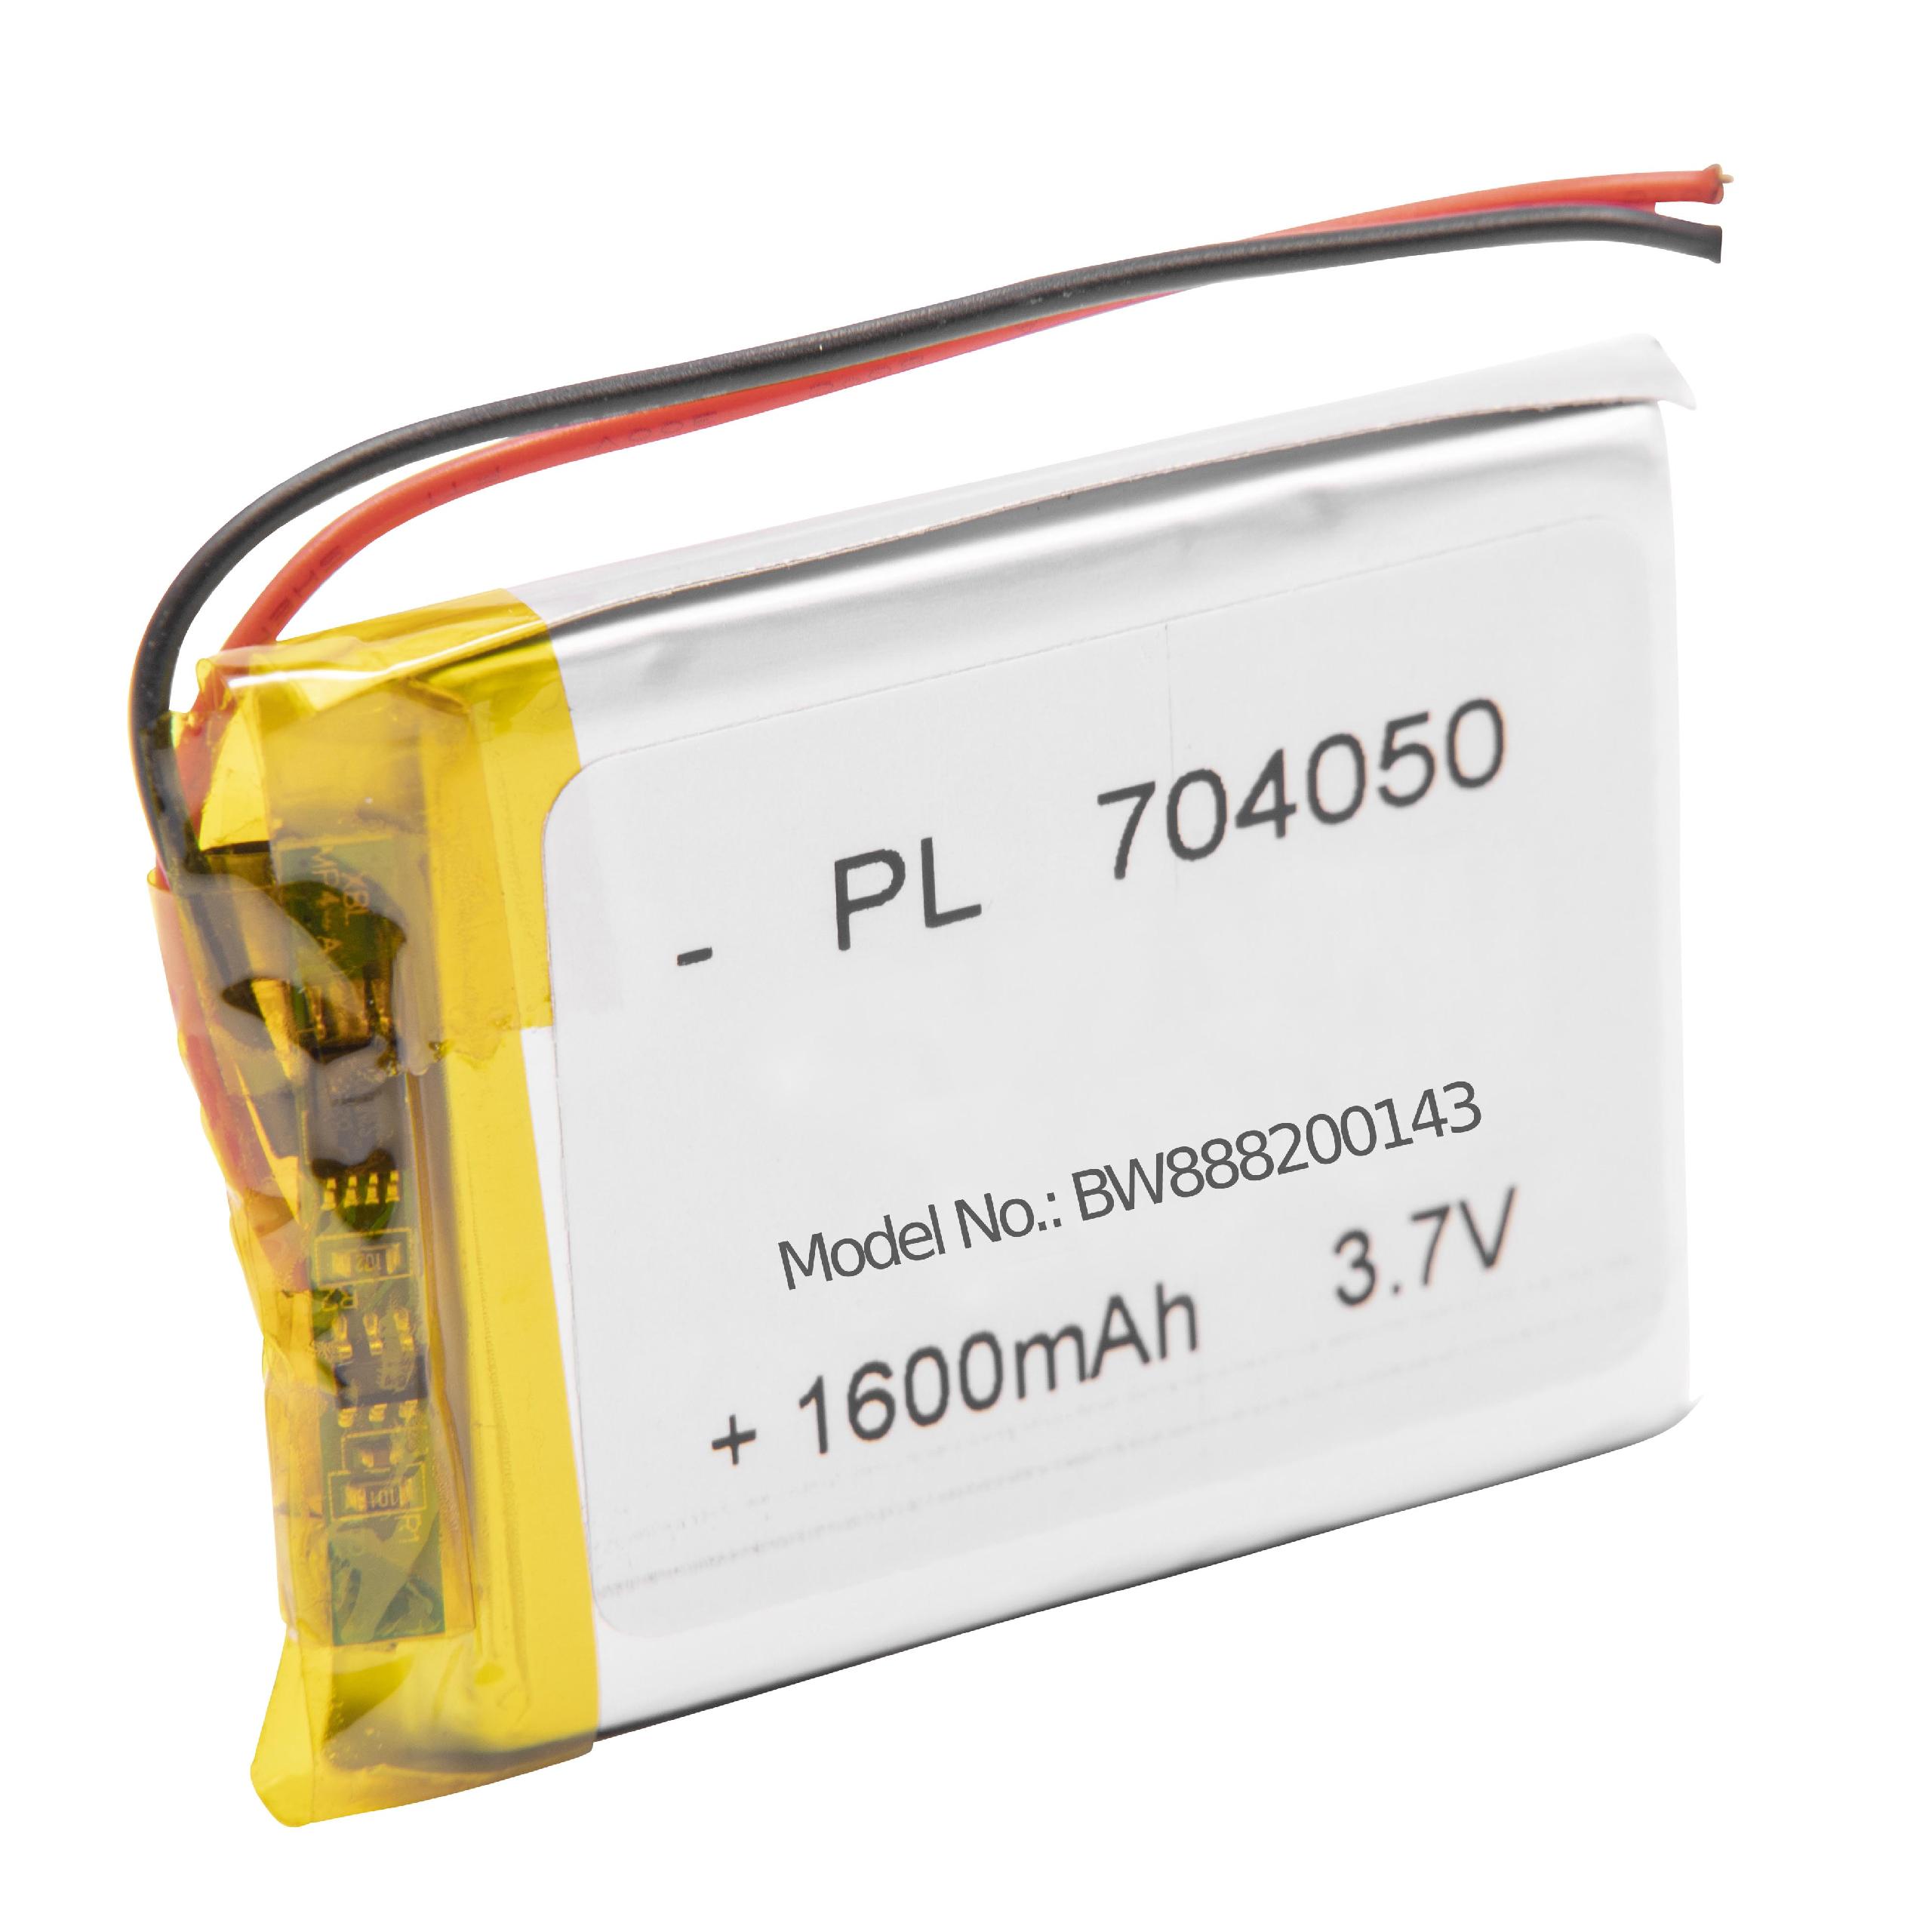 Desktop Lamp Battery Replacement for Fatboy PN704050 - 1600mAh 3.7V Li-polymer